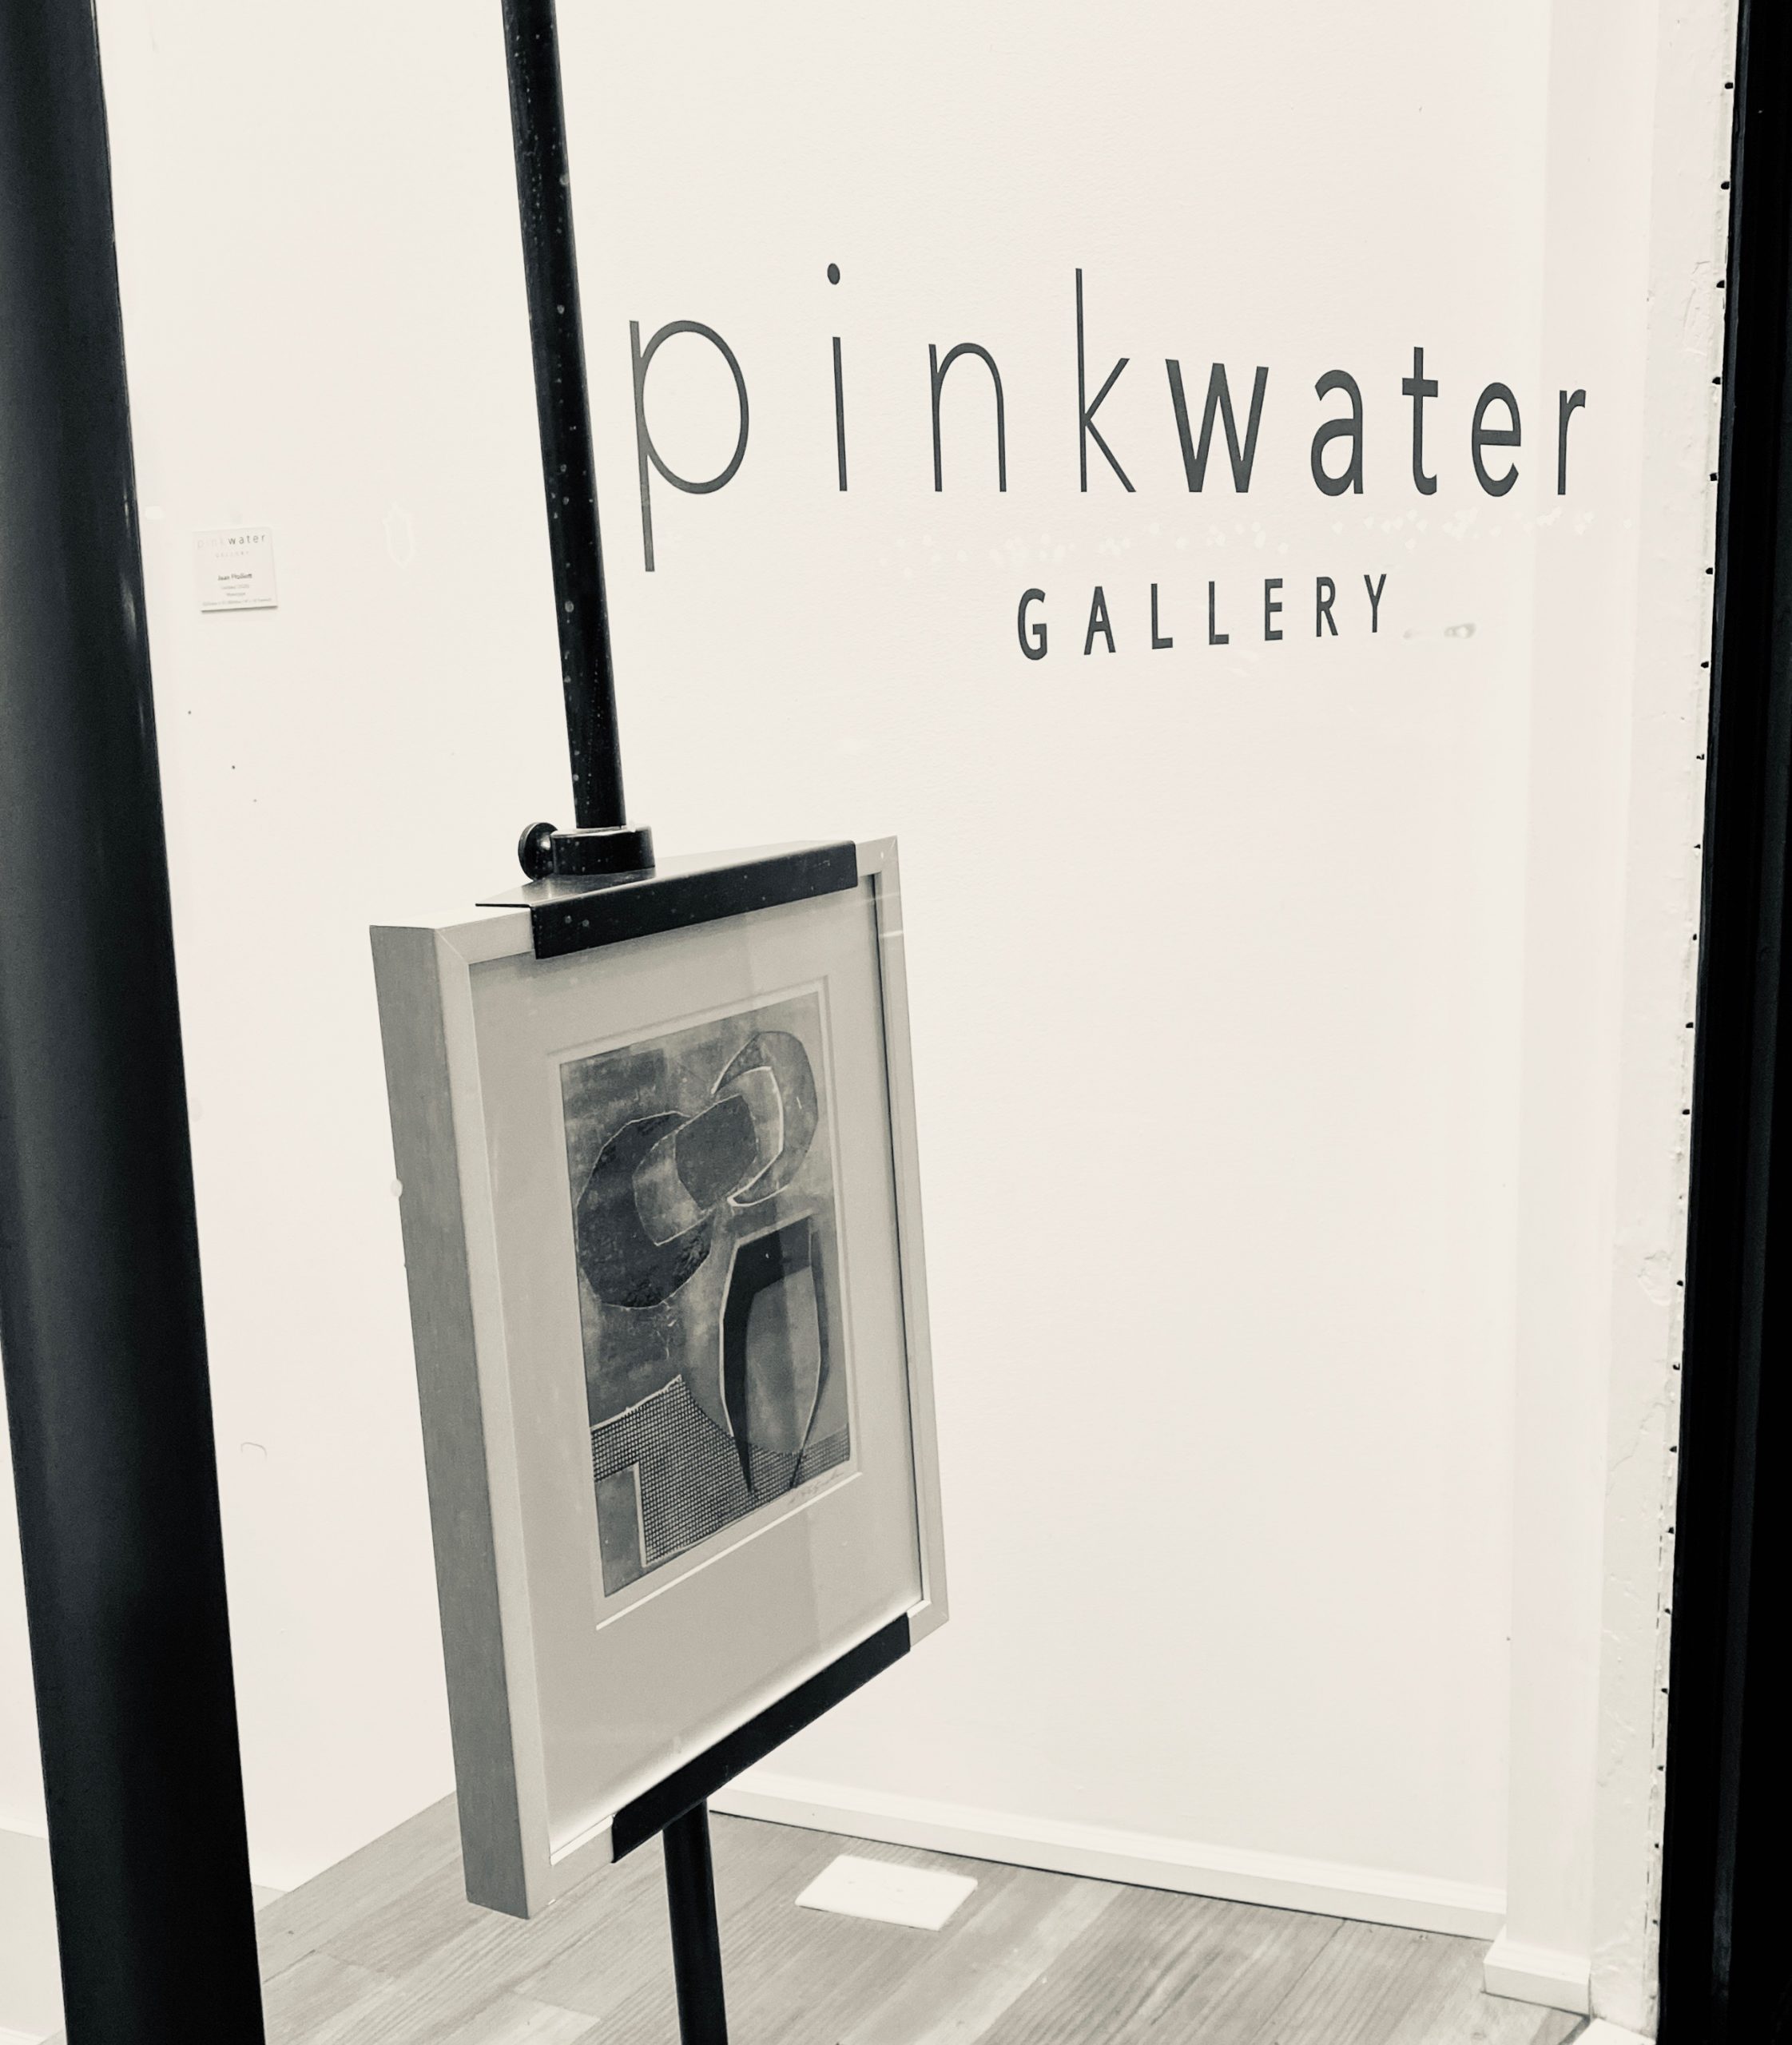 Pinkwater Gallery